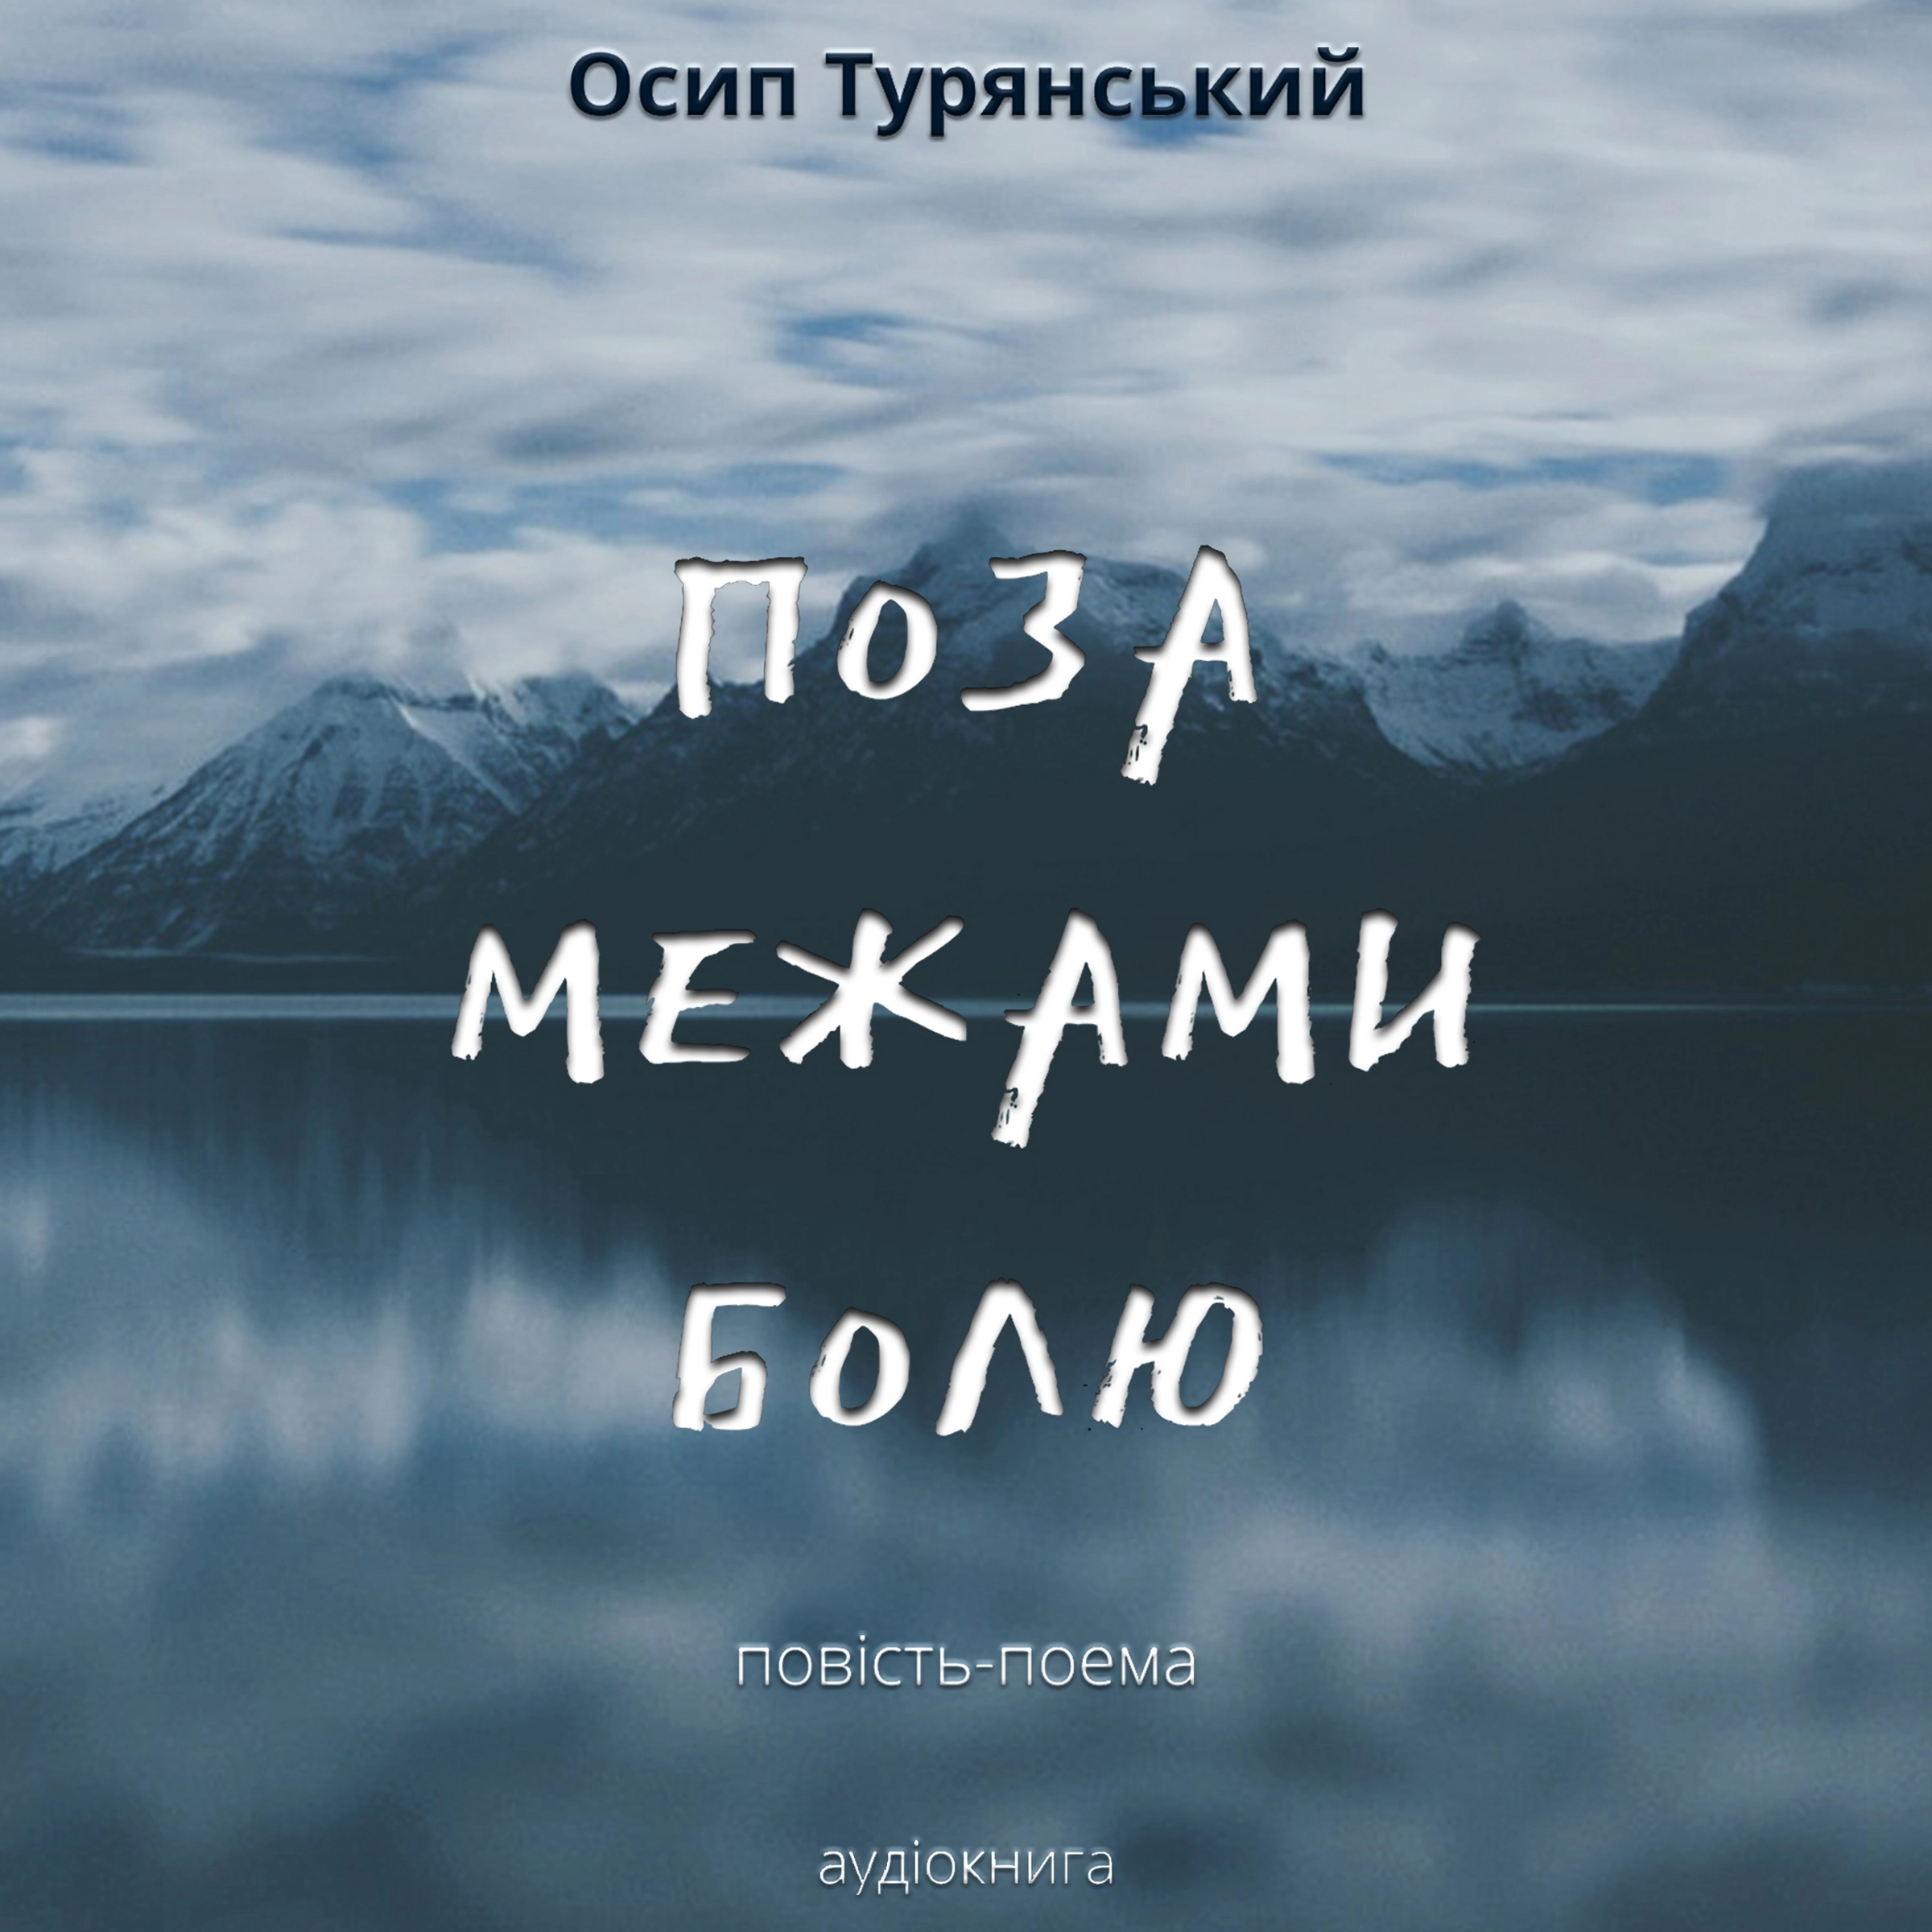 Osip Turyanskiy - Poza mesjamy boliy by Osip Turyanskiy Audiobook